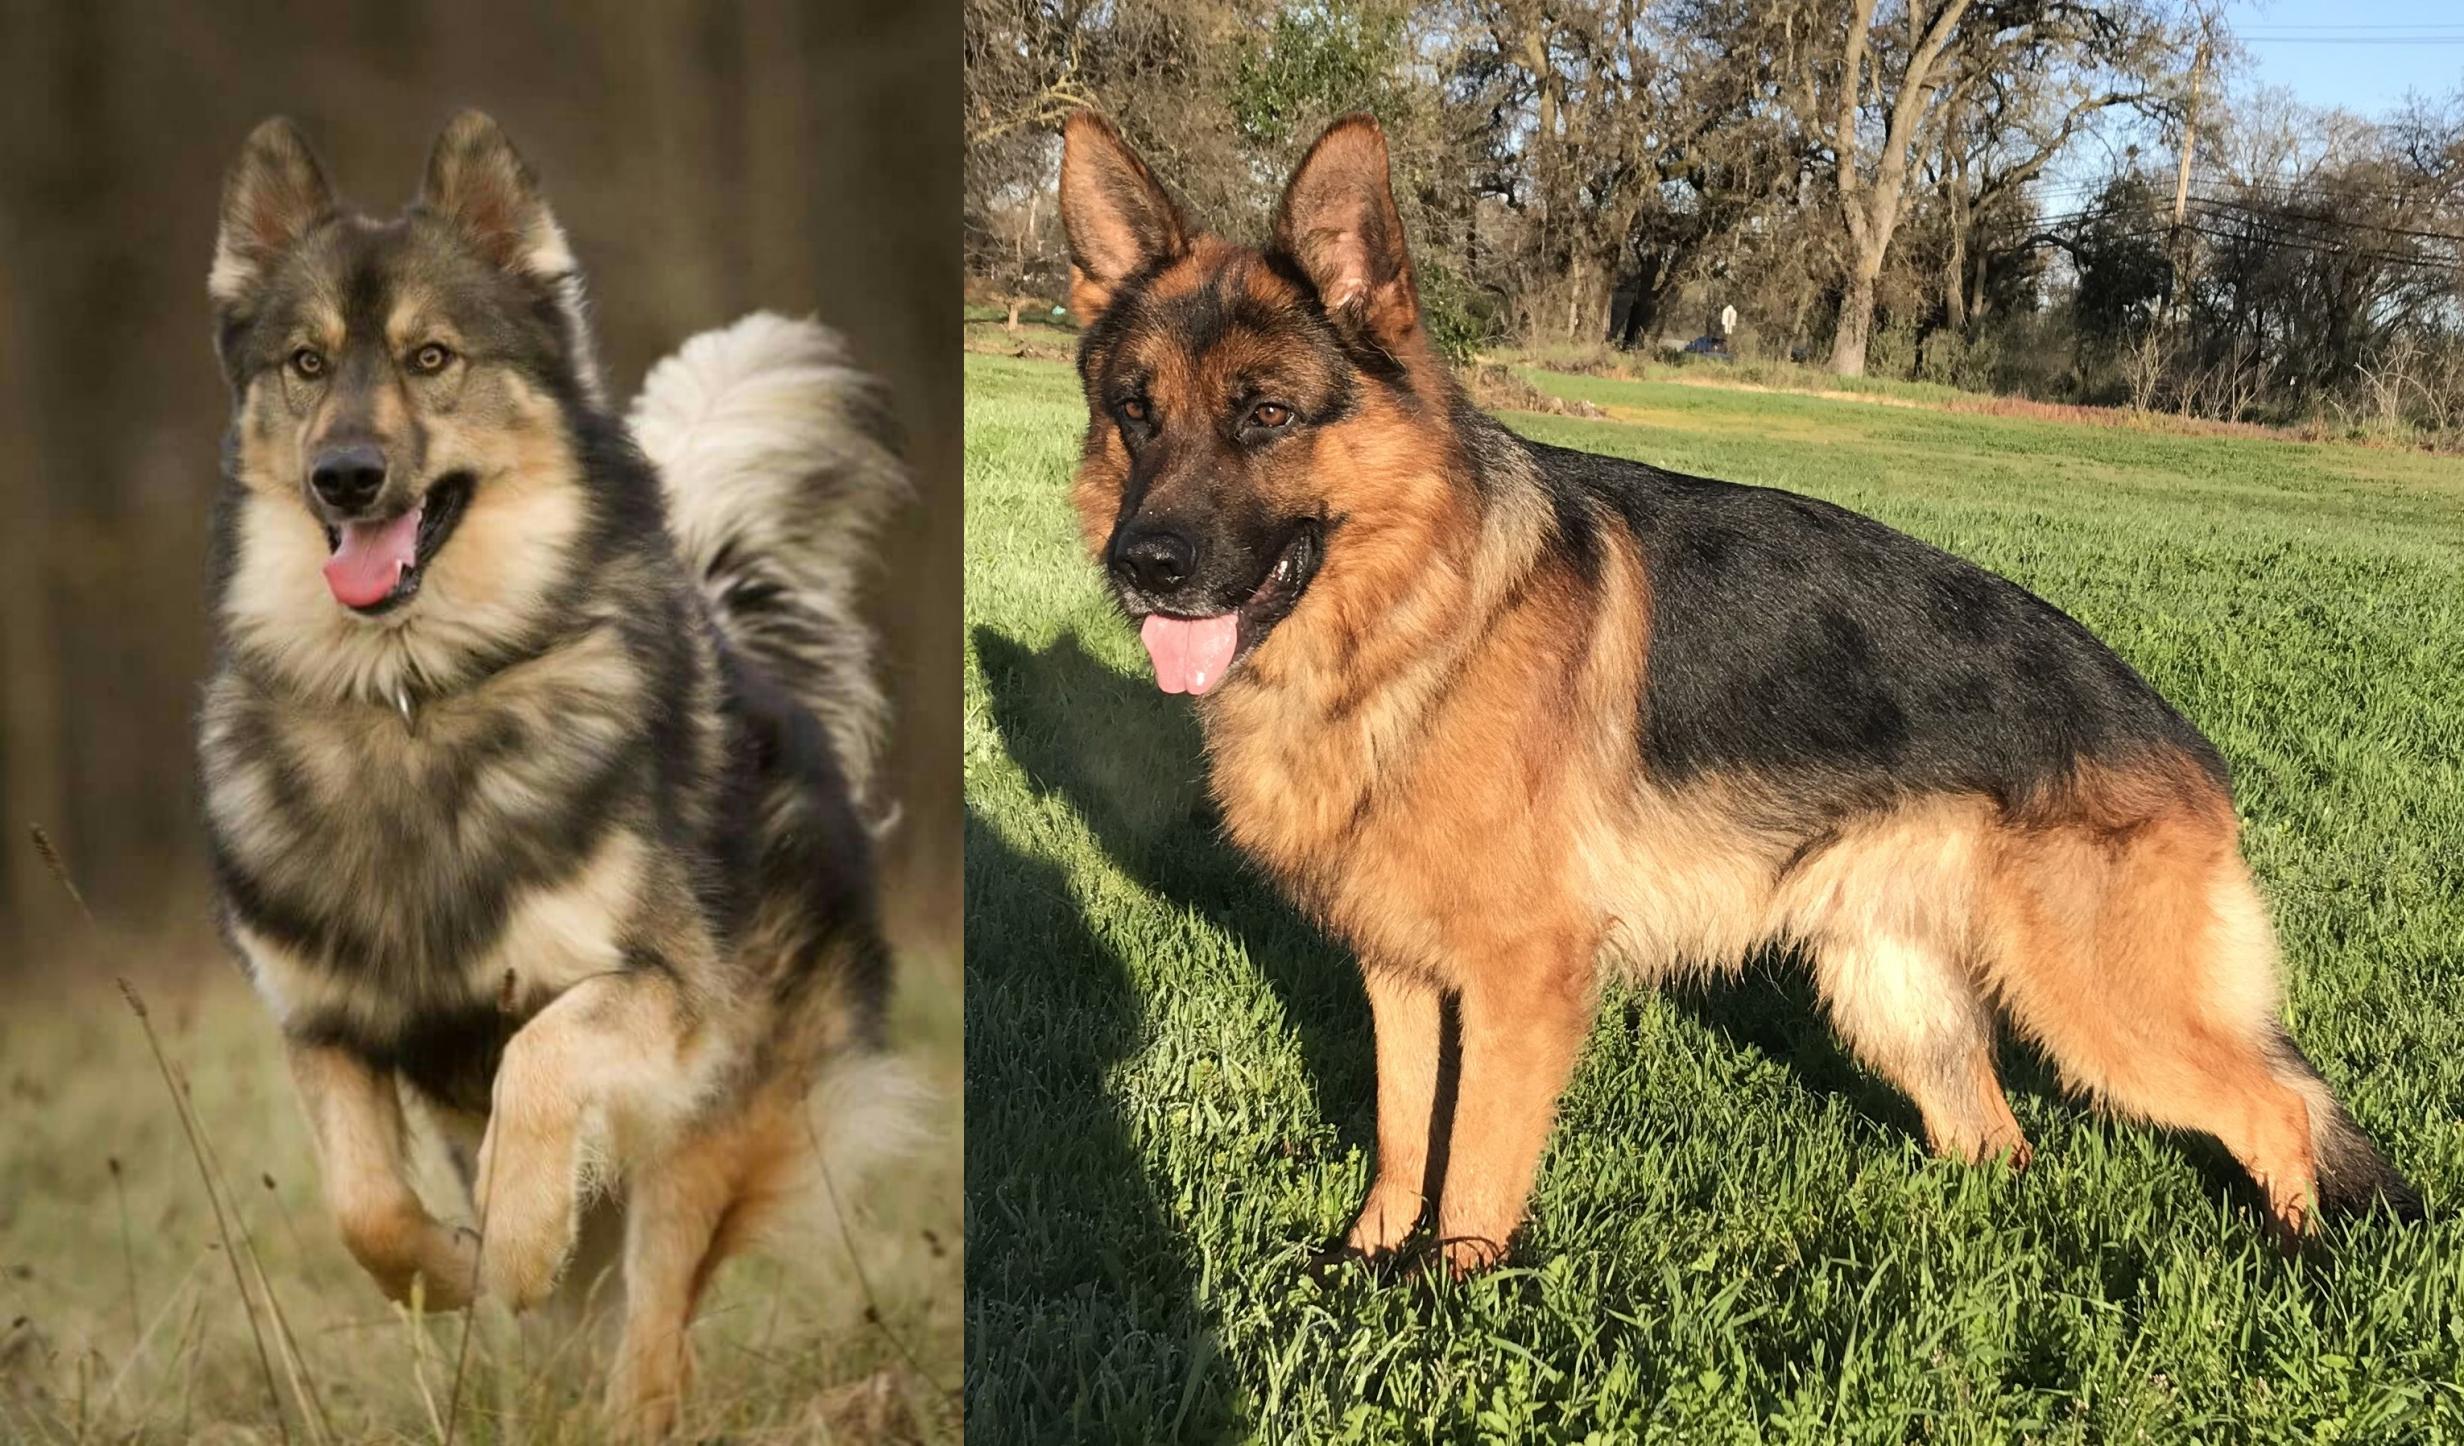 Native American Indian Dog vs German Shepherd - Breed Comparison